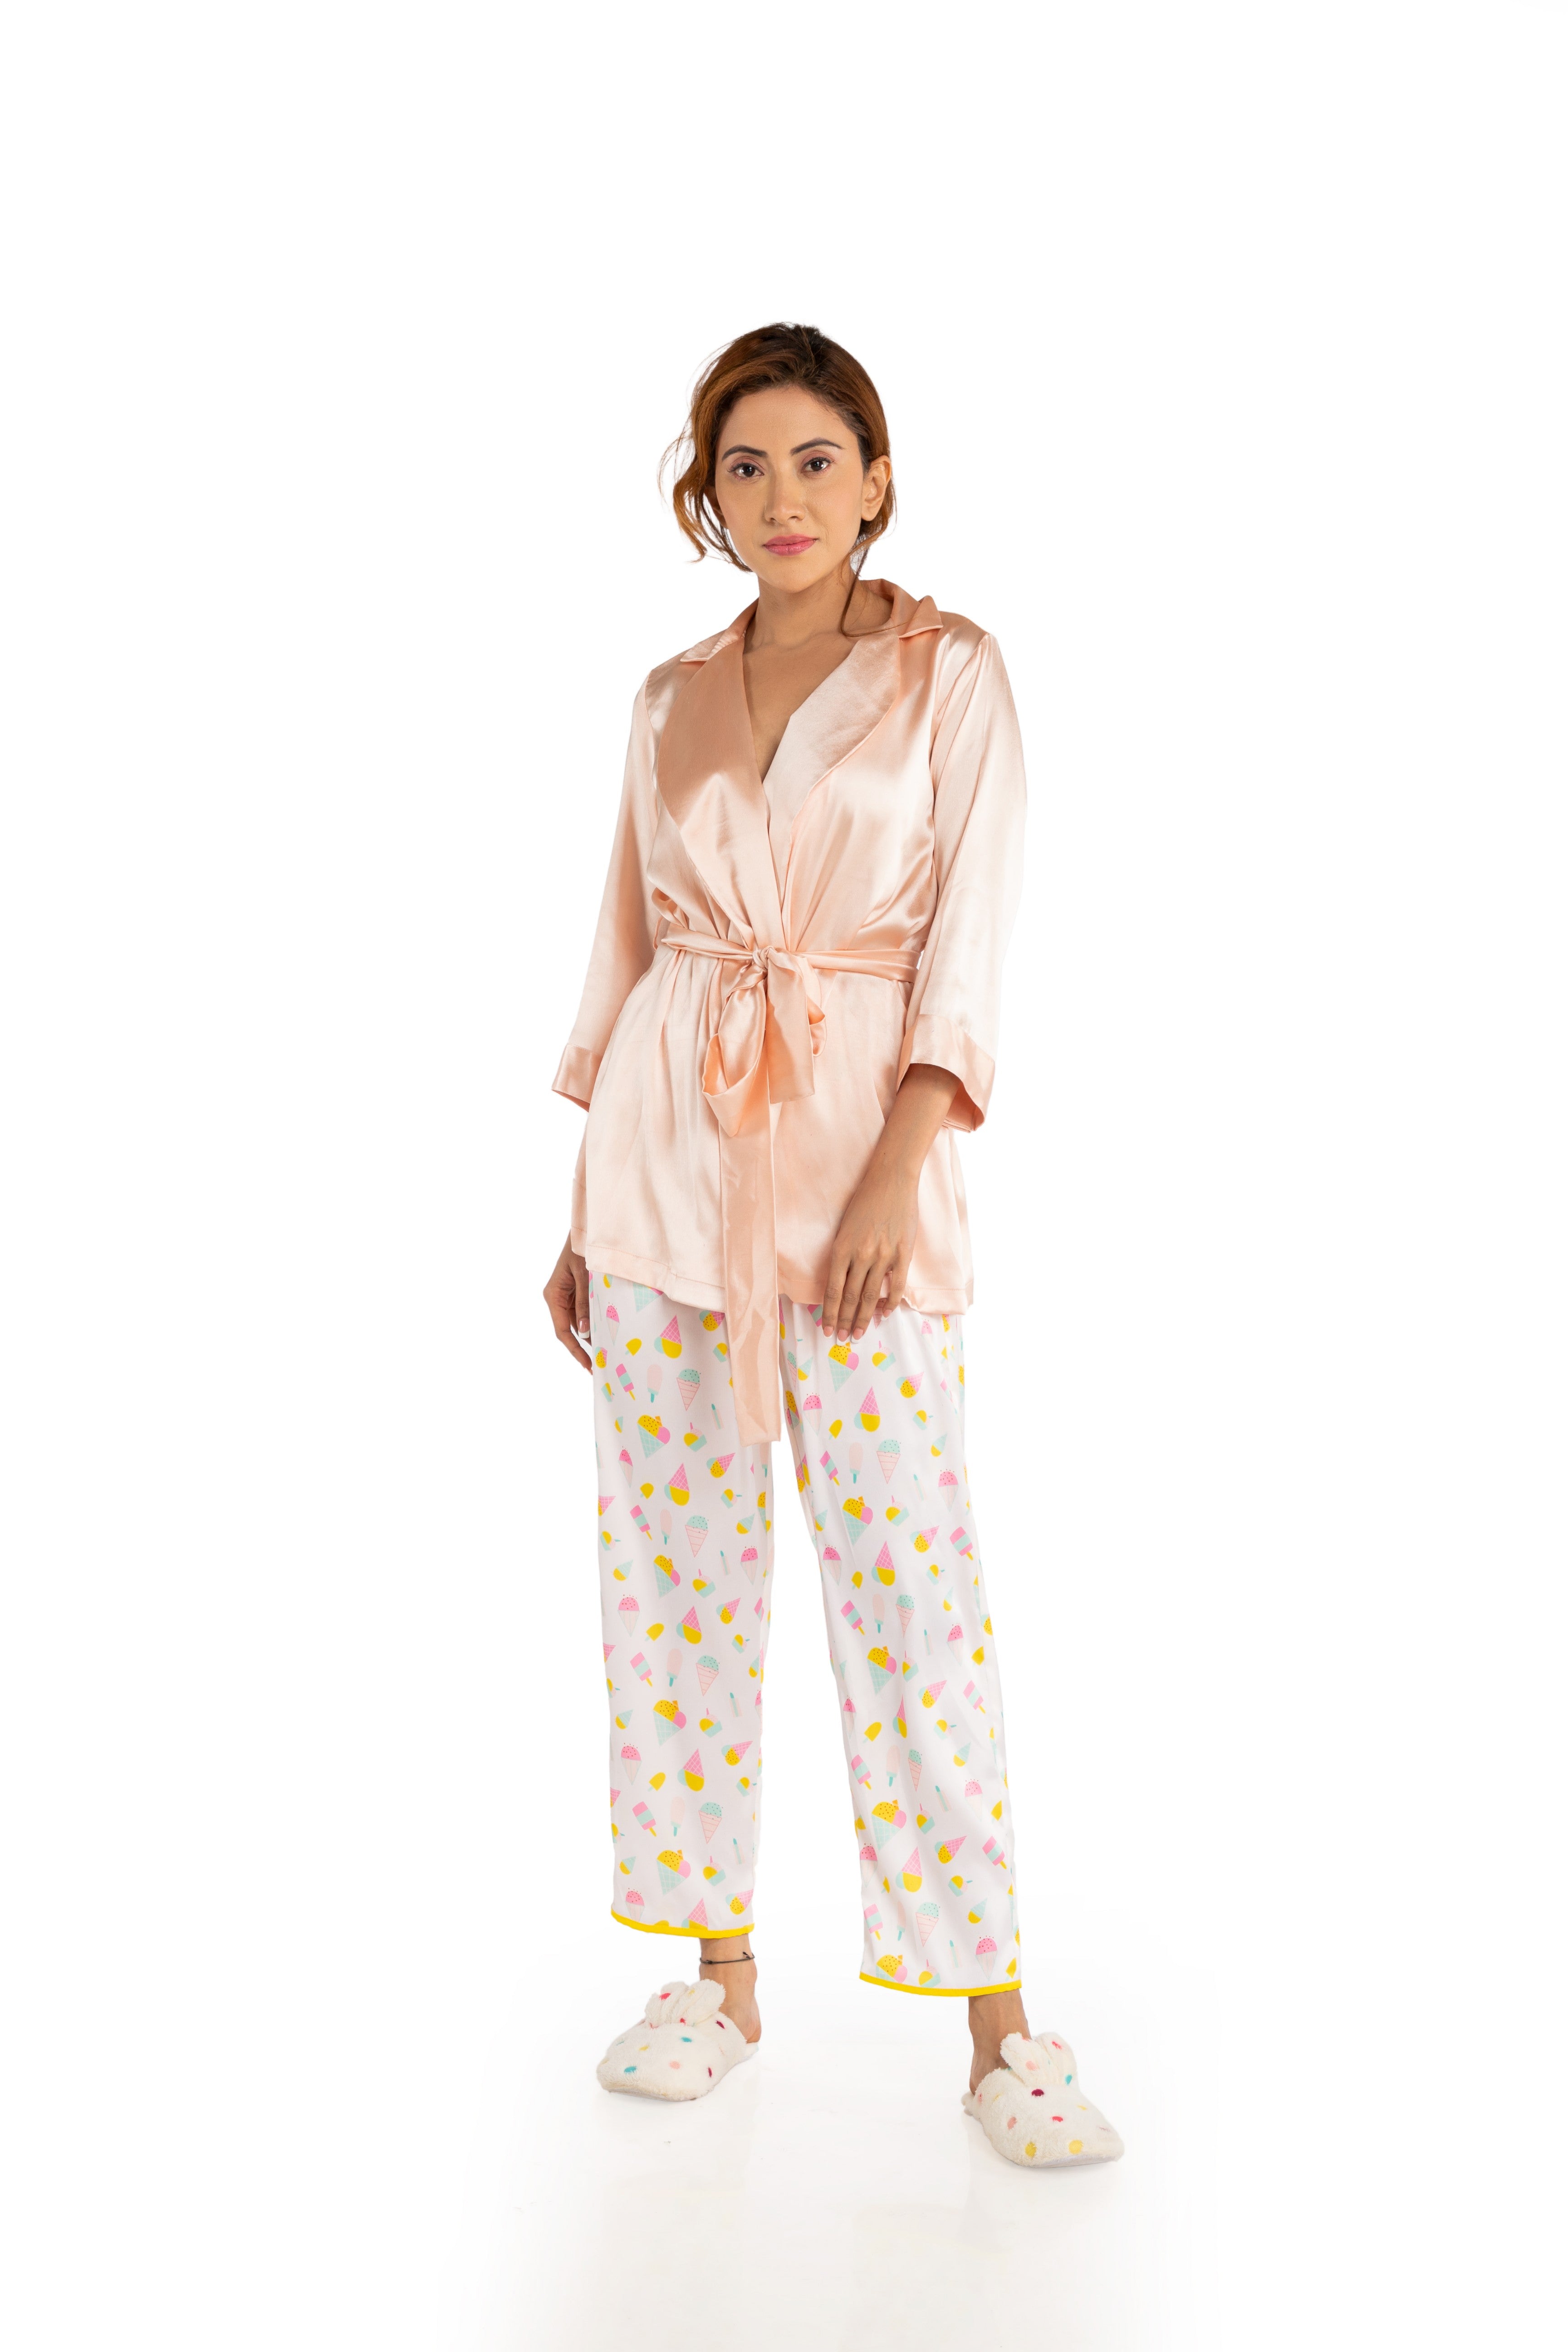 Peach Overlap Top And Printed Pants Satin Nightwear Set